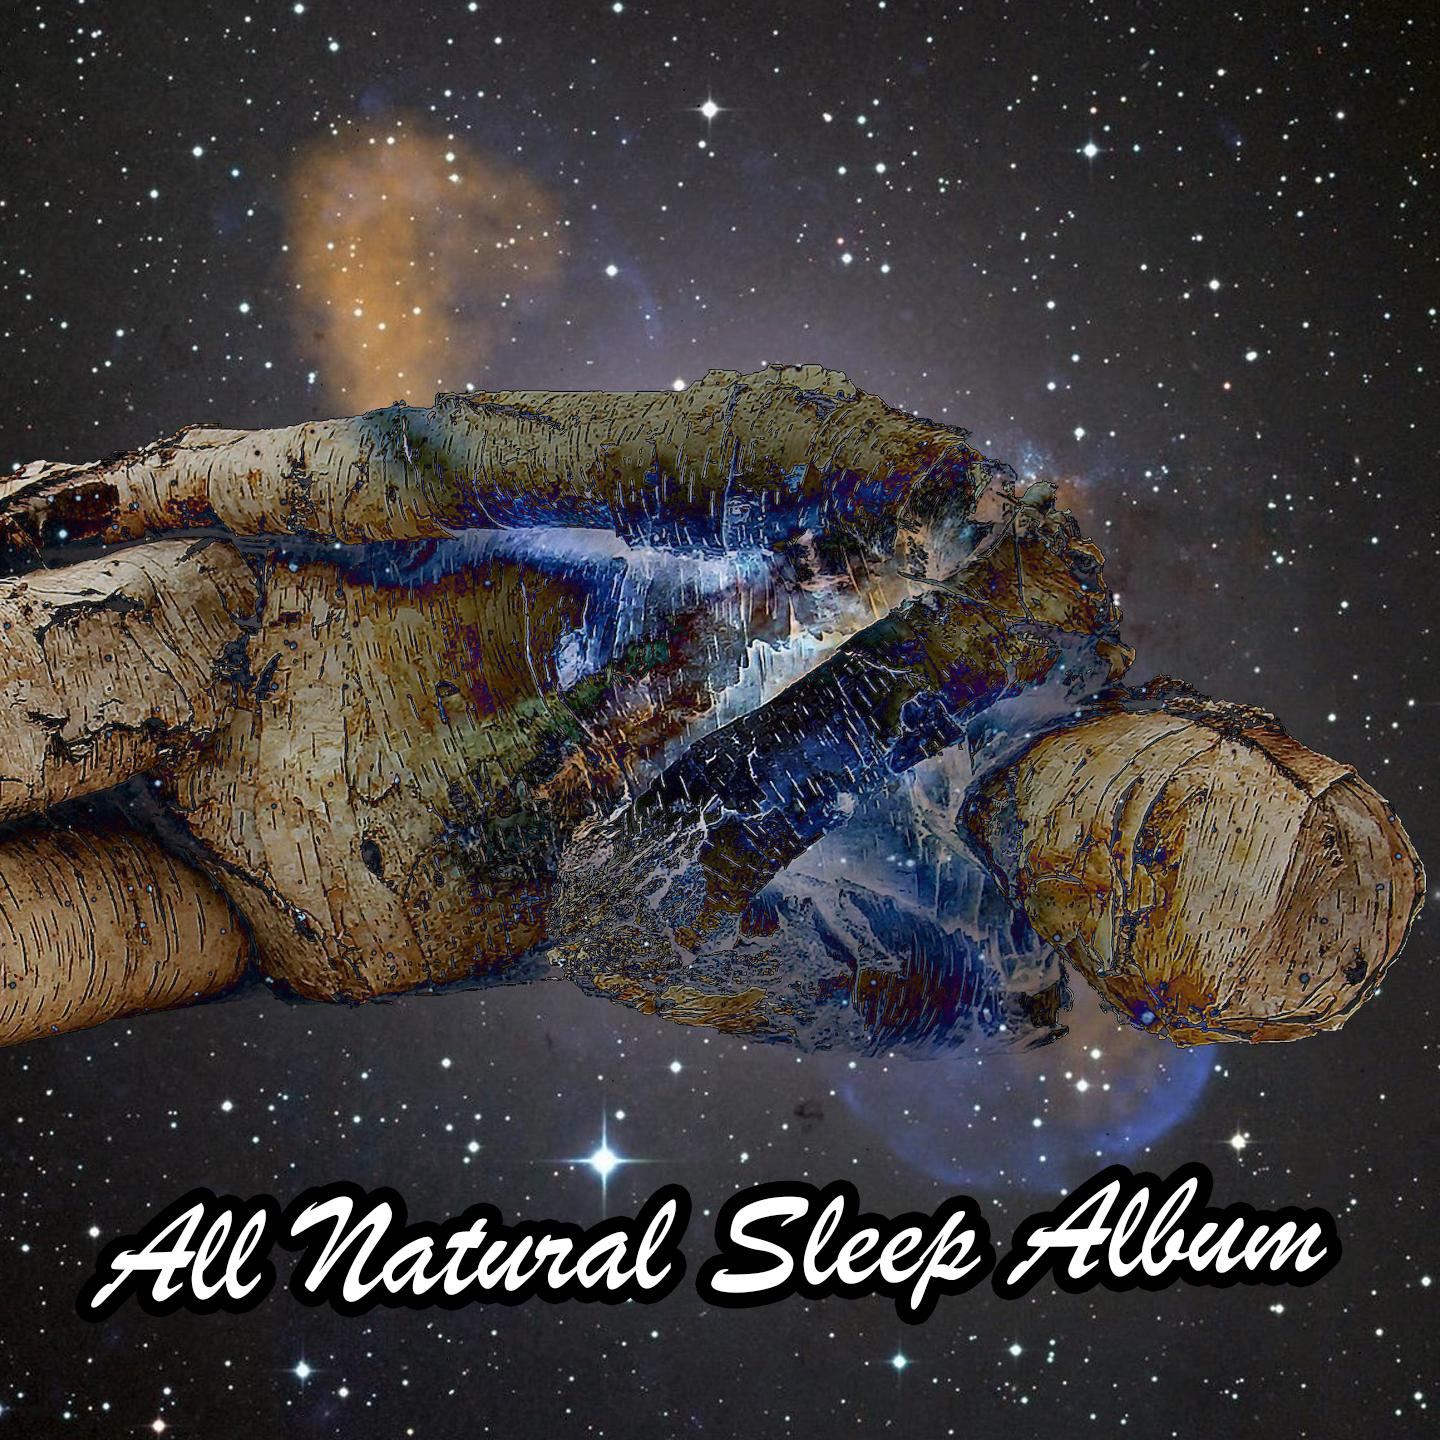 All Natural Sleep Album